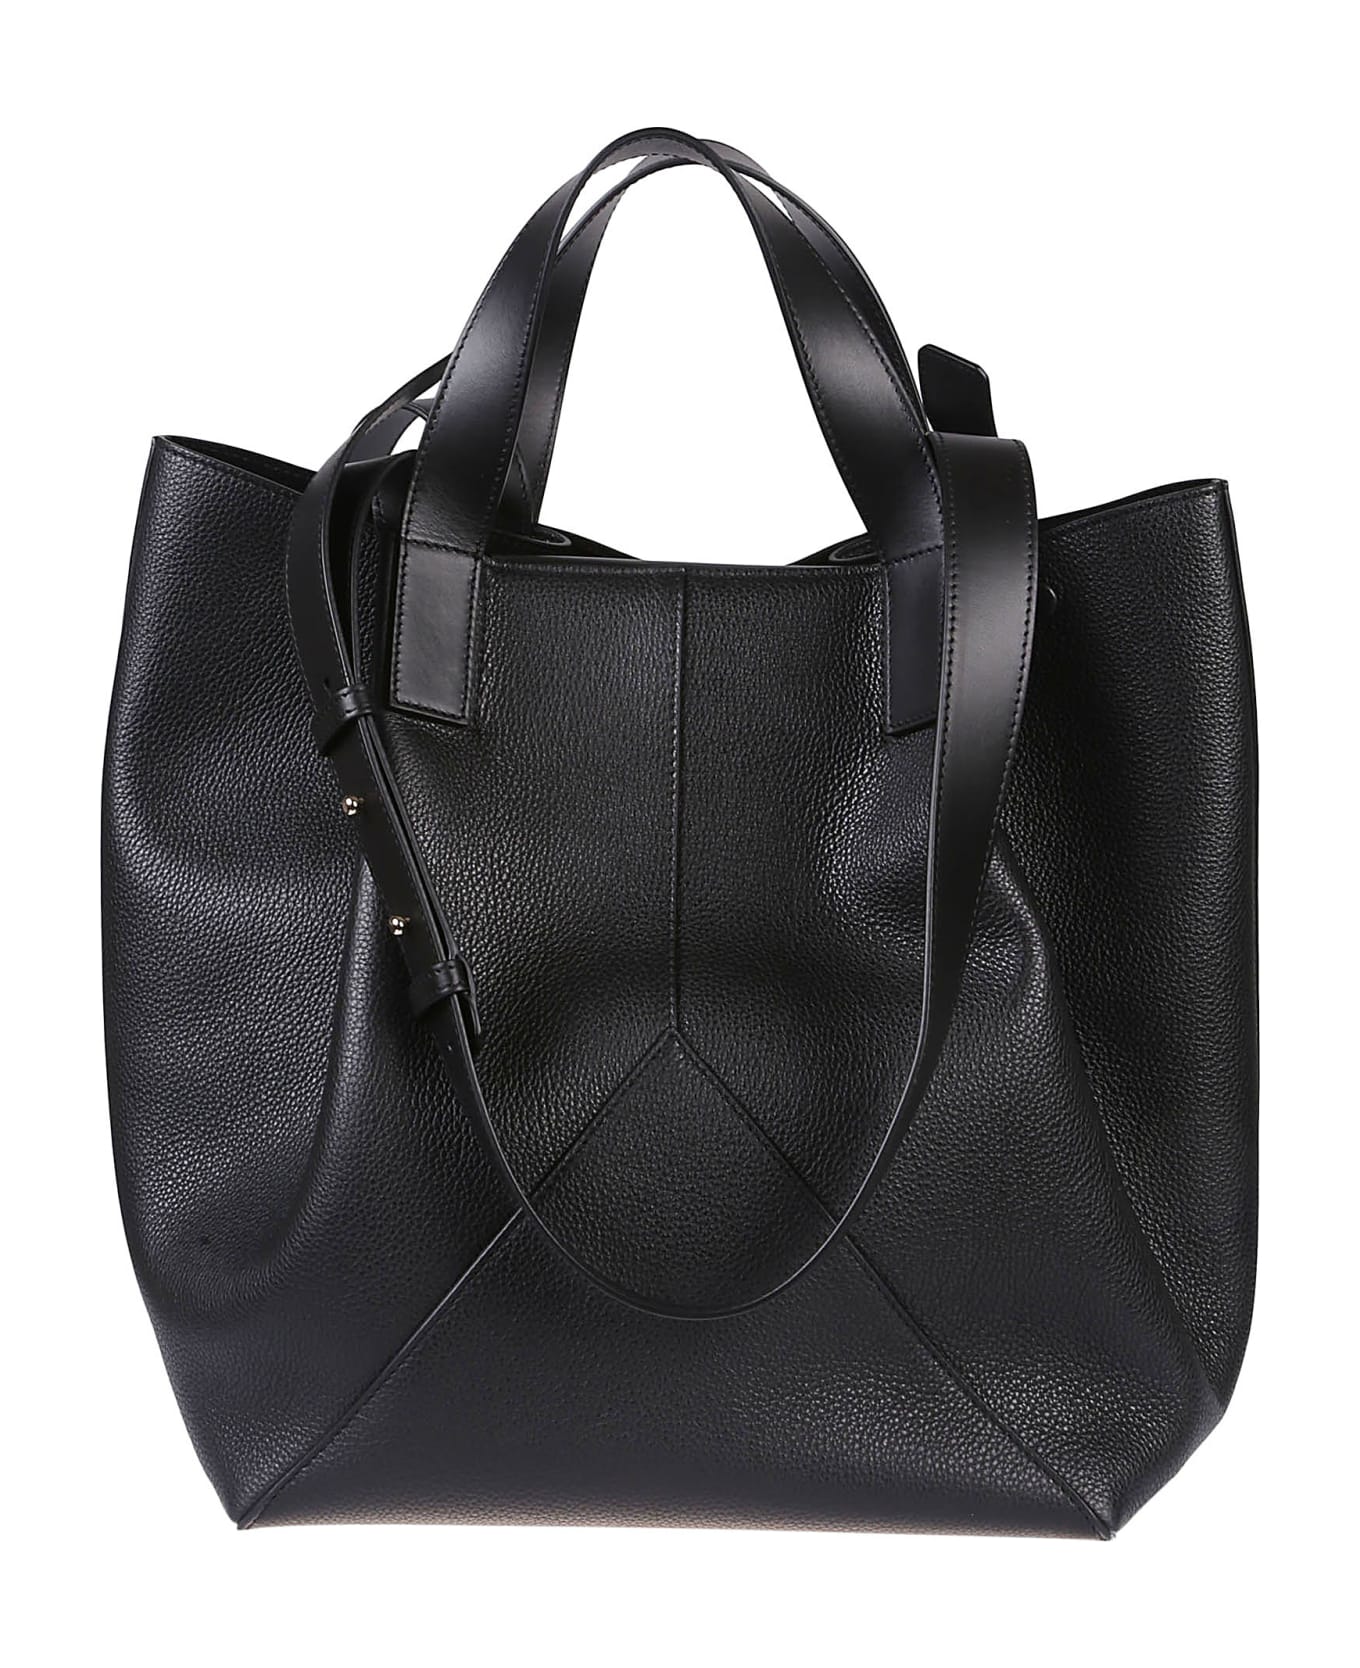 Victoria Beckham Medium Jumbo Shopping Bag - Black